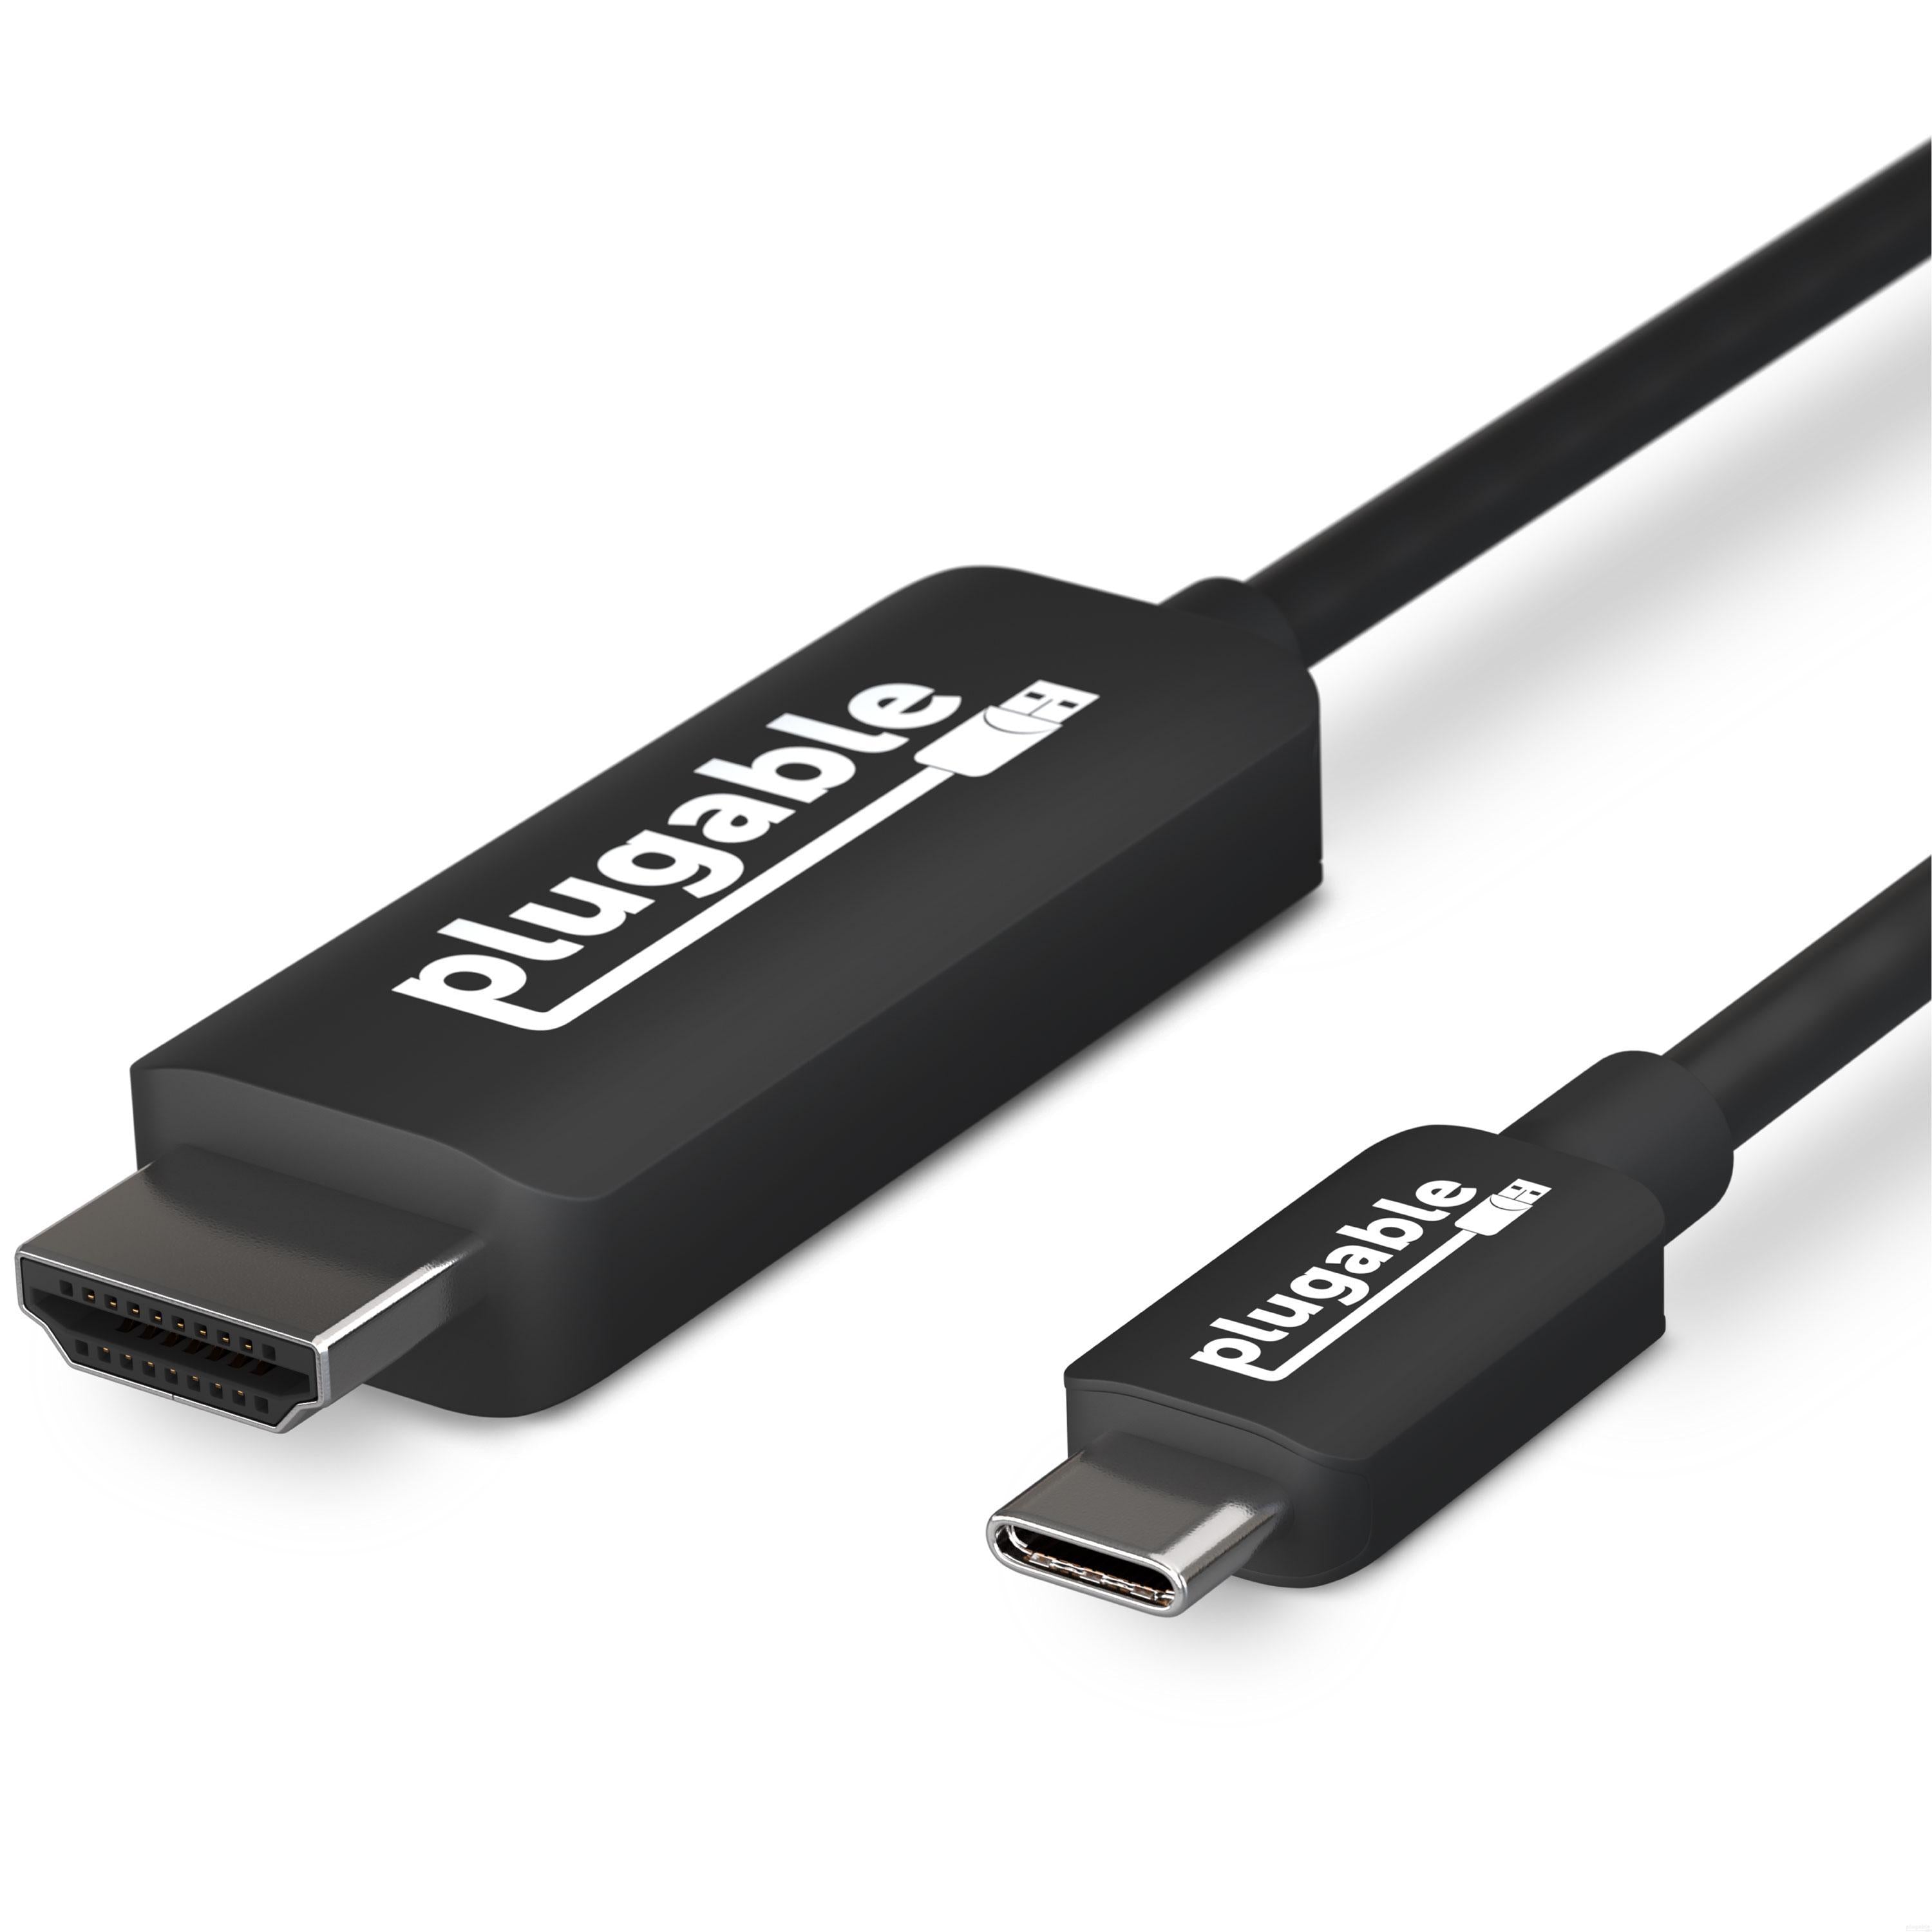 Plugable USB to HDMI 2.0 Cable – Technologies